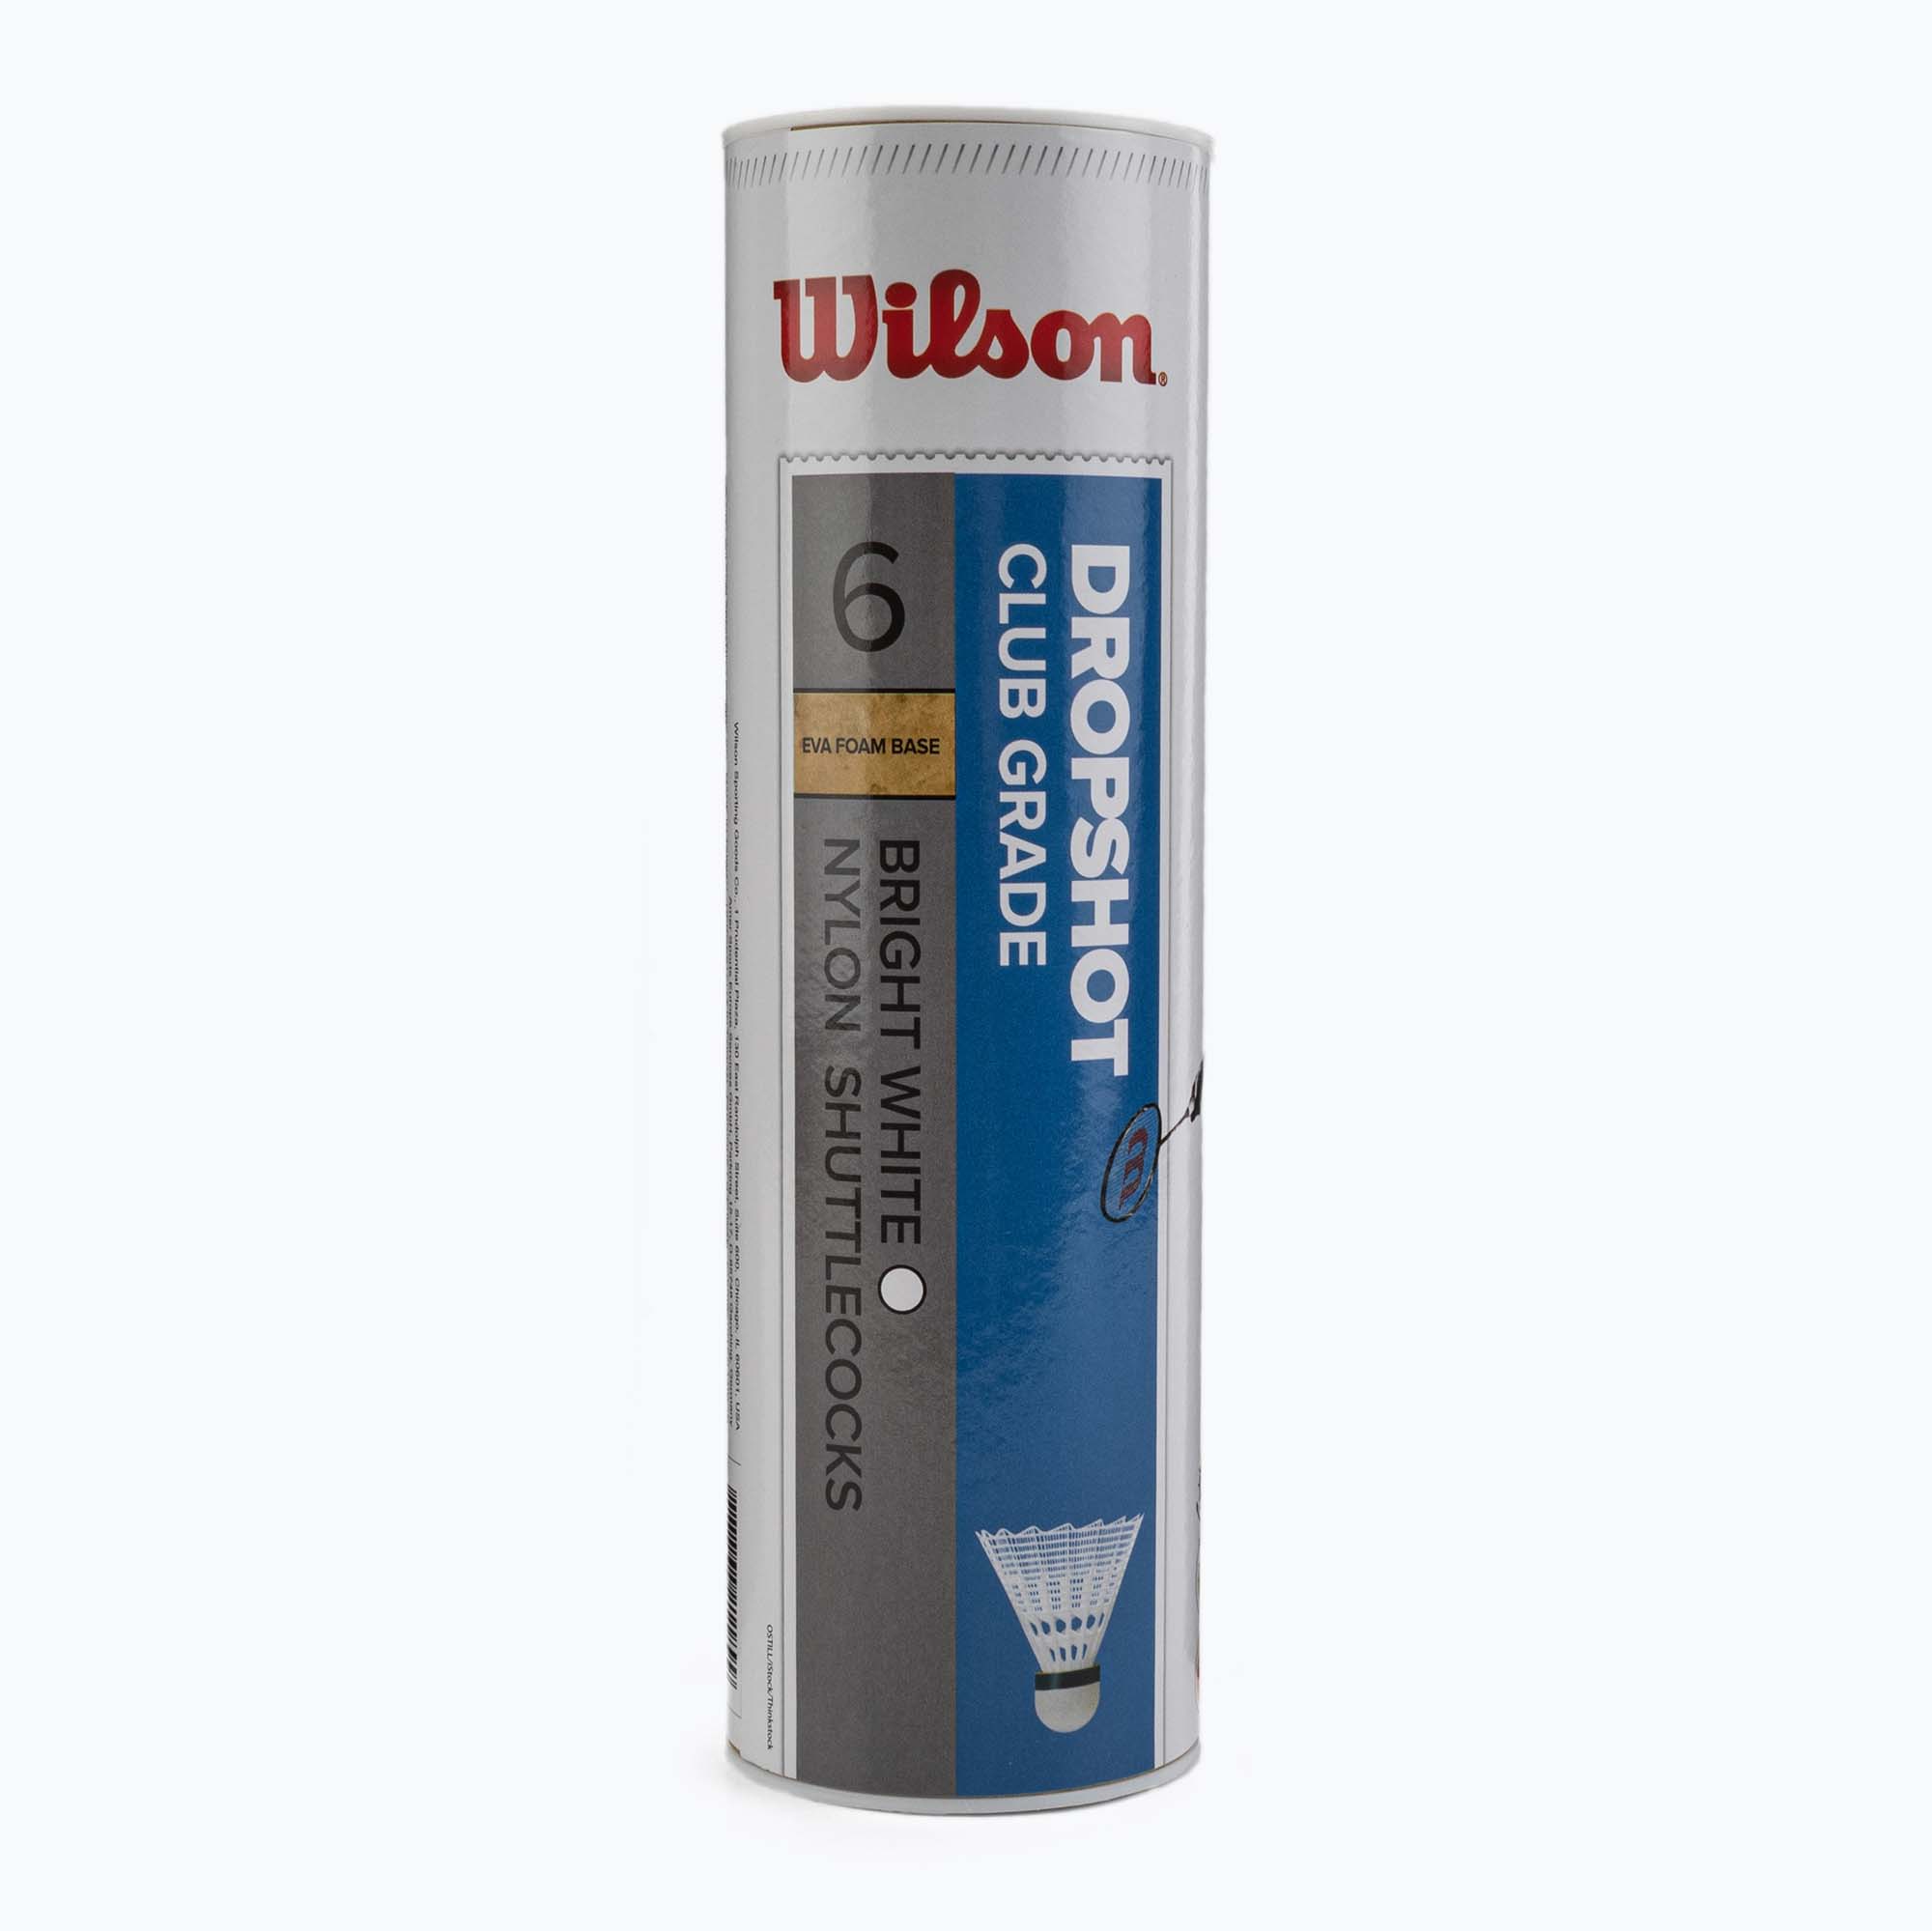 Wilson Dropshot bedmintonové raketoplány 6 ks biele WRT6046WH